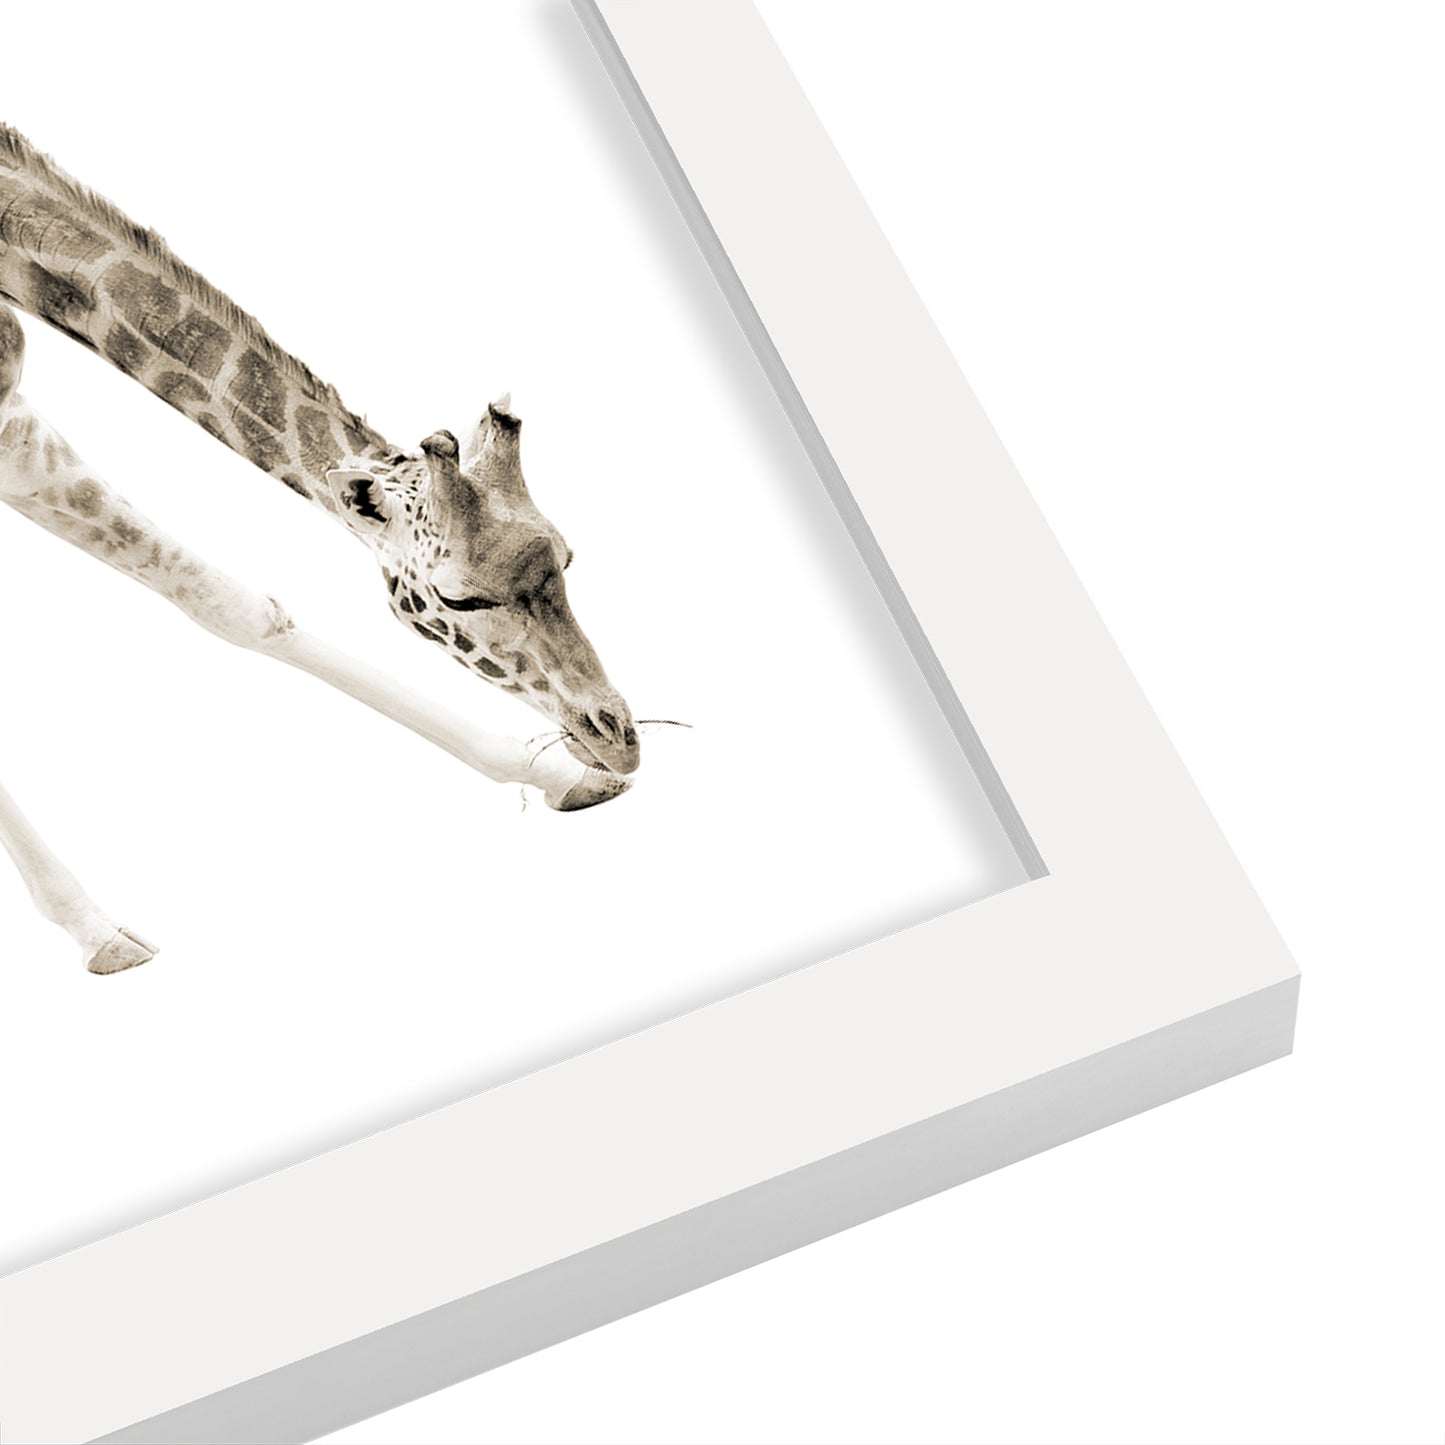 Beige Giraffe 3 By Wall + Wonder - White Framed Print